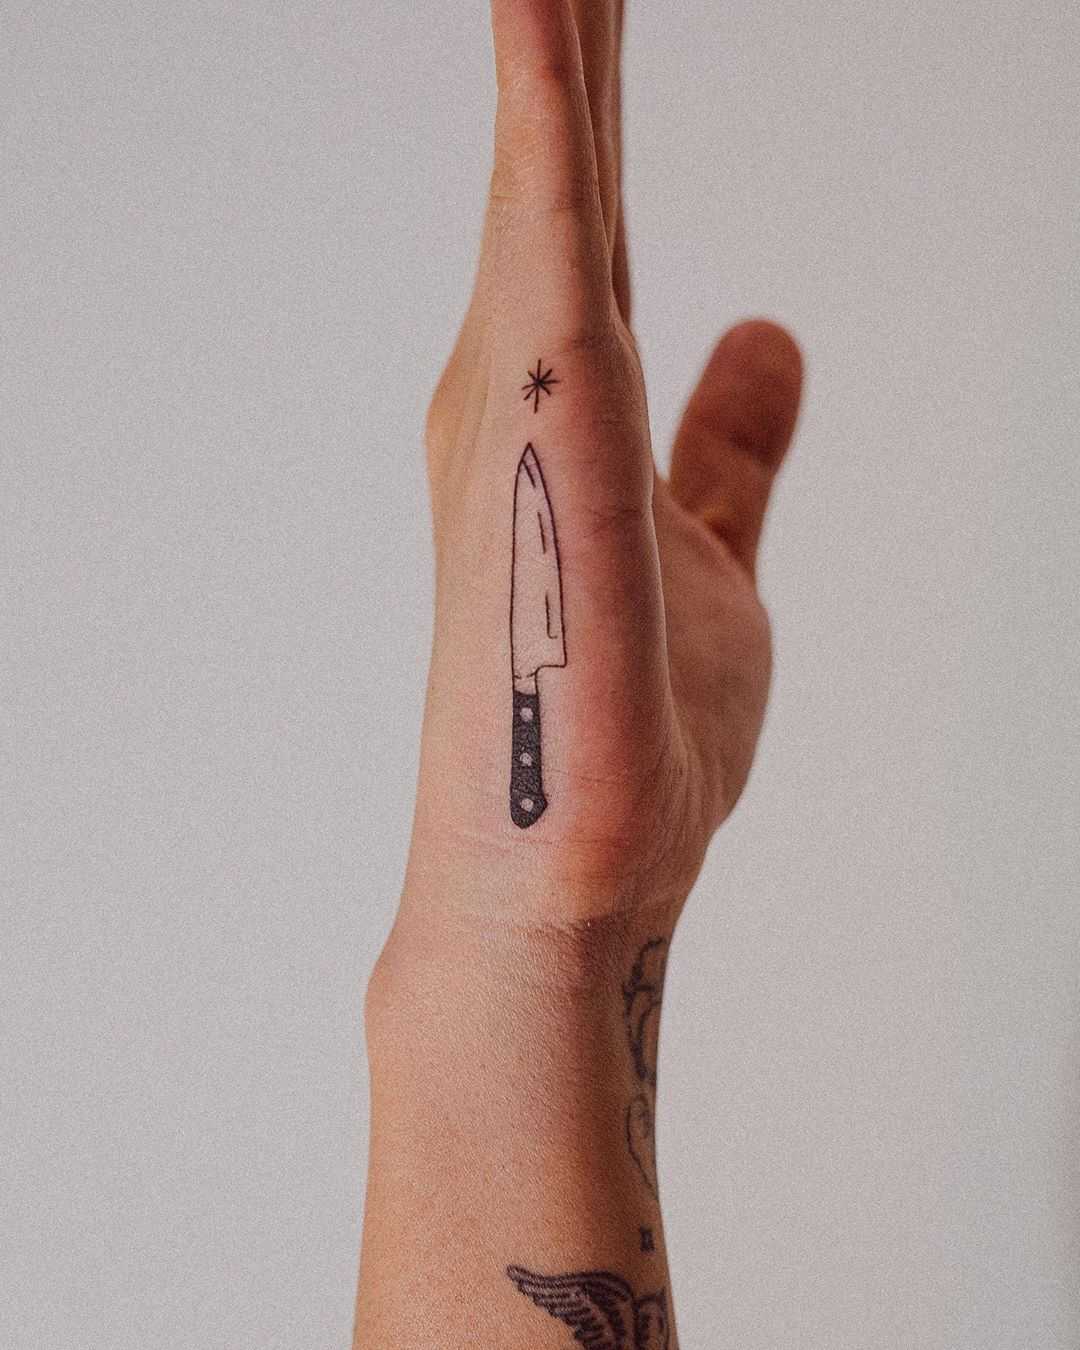 Small knife by tattooist Bongkee - Tattoogrid.net